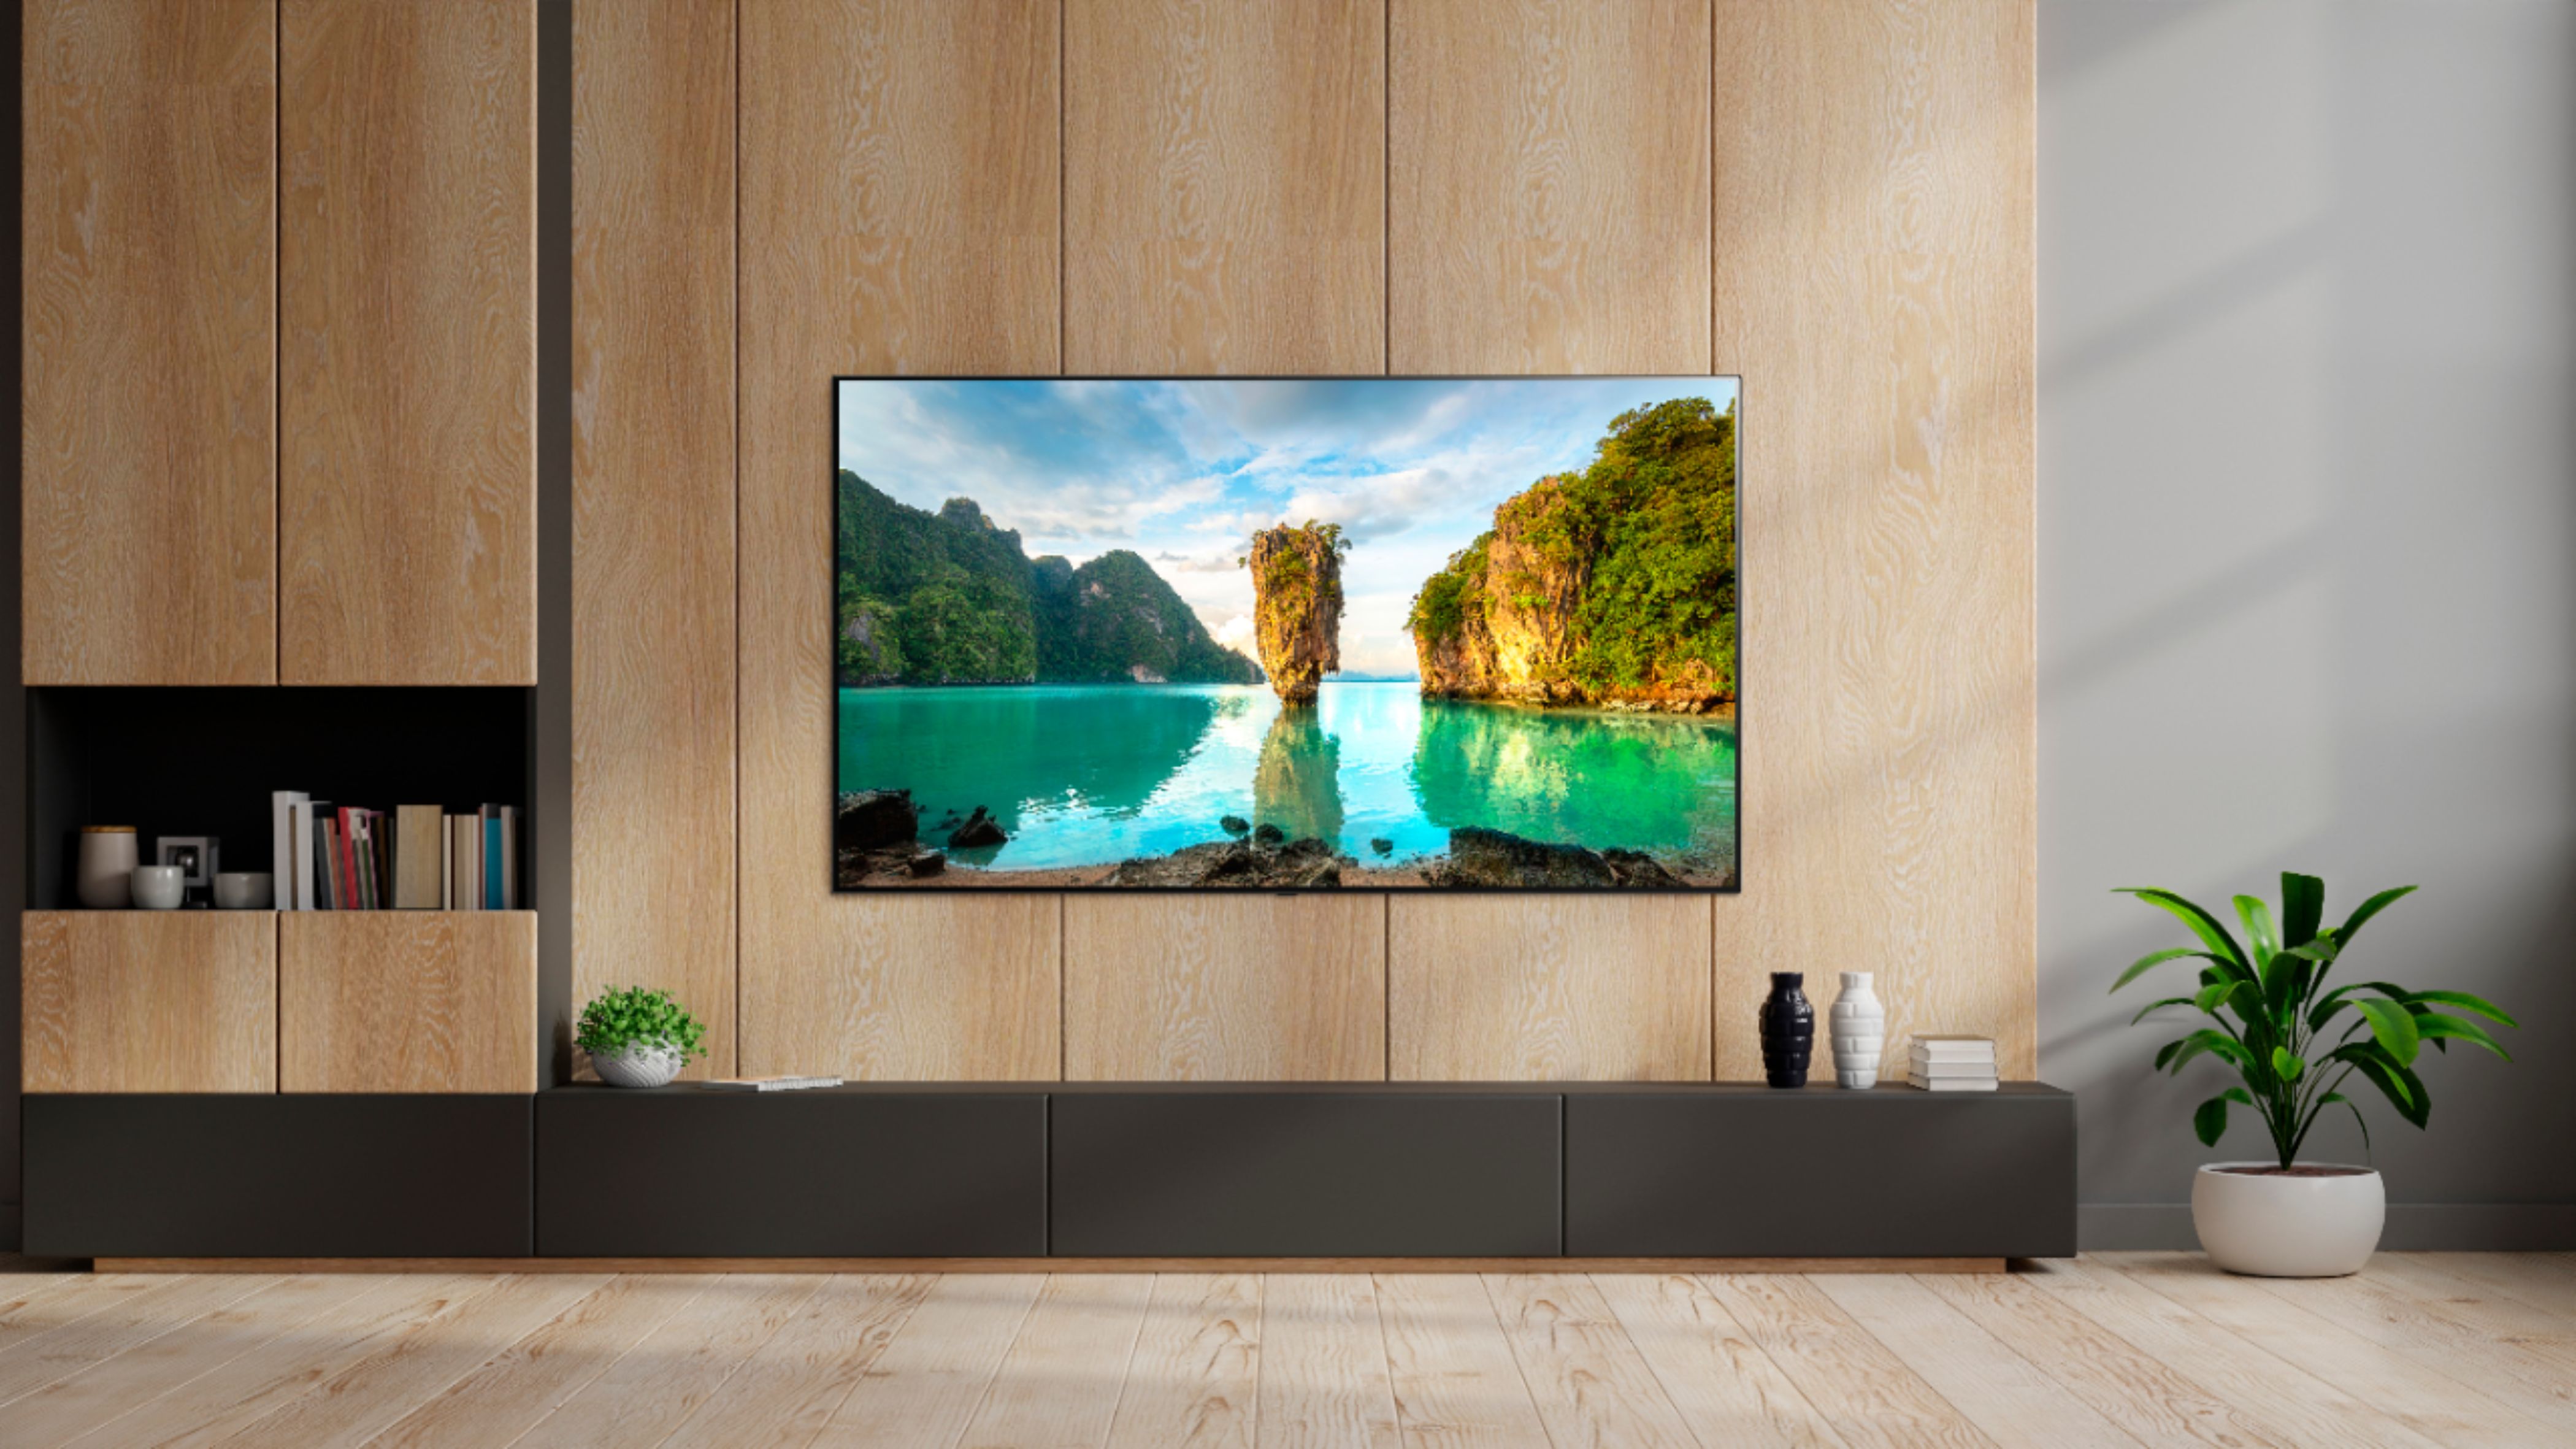 LG A1 65 inch Class 4K Smart OLED TV w/ ThinQ AI® (64.5'' Diag)